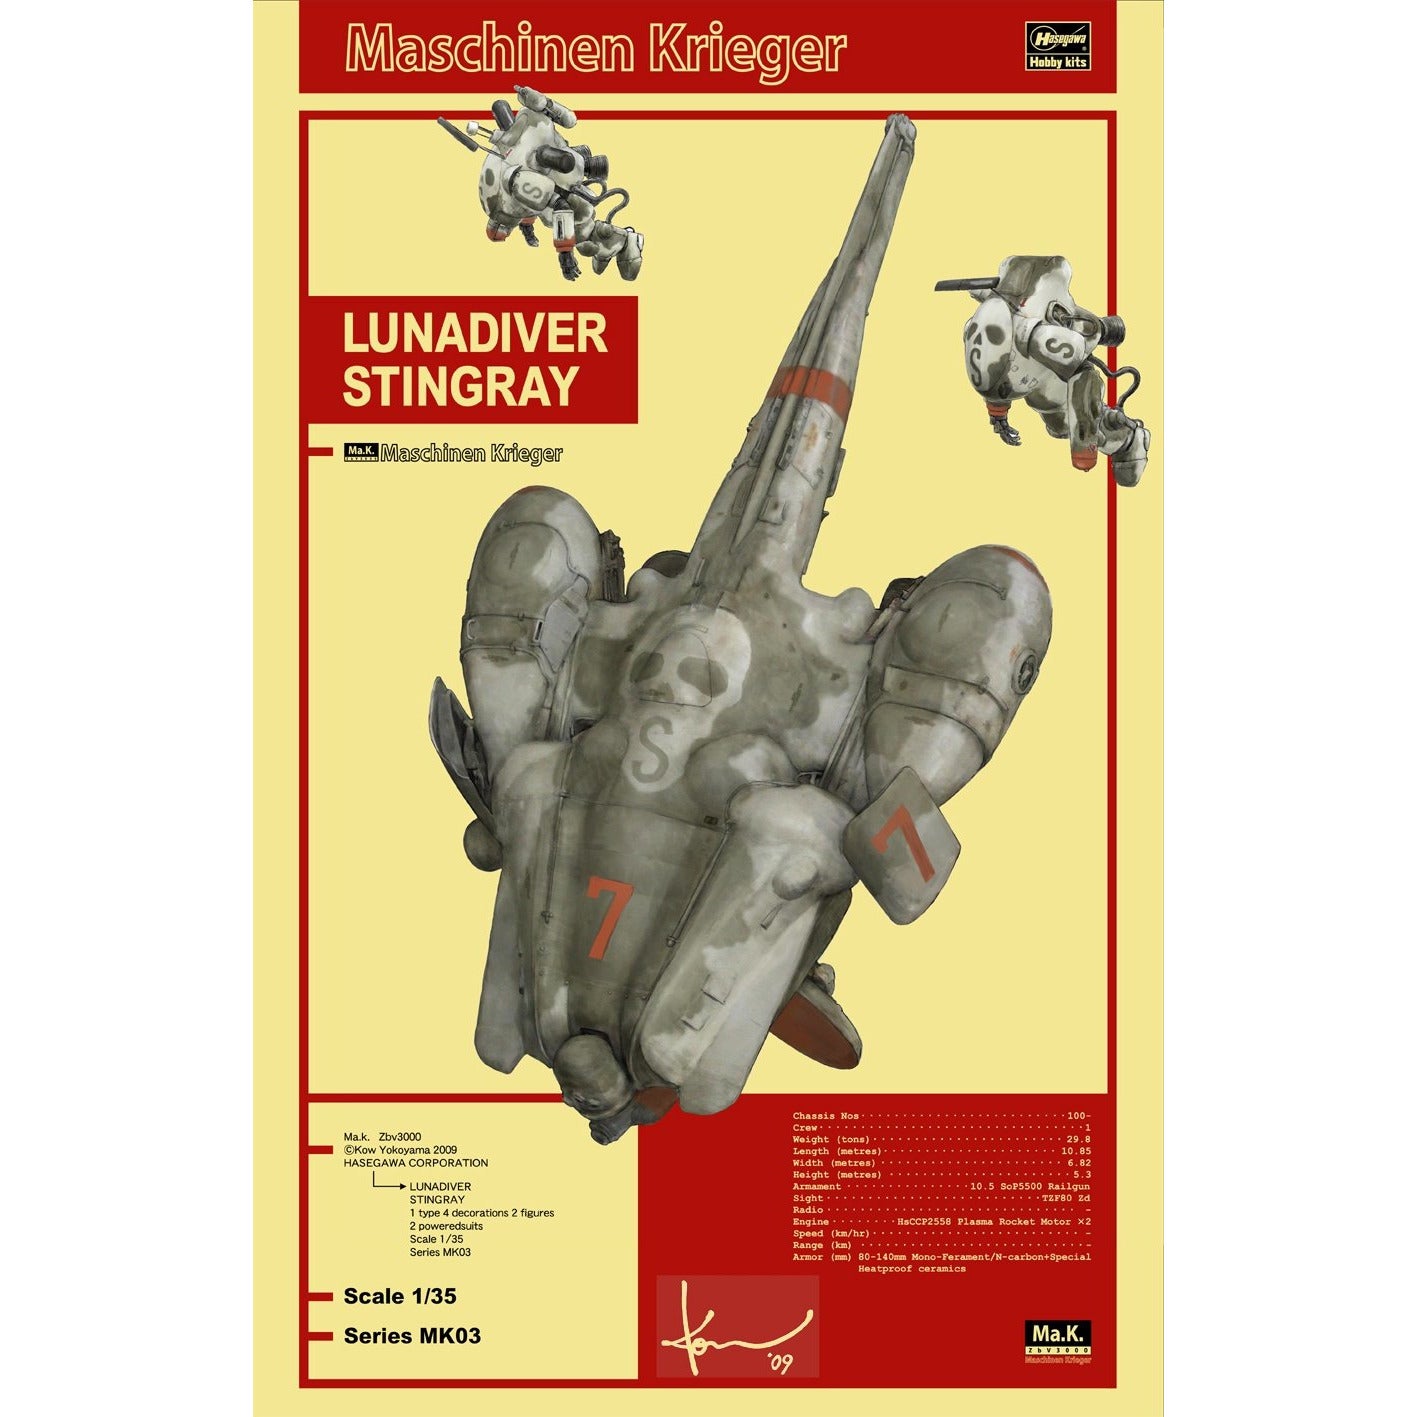 Lunadiver Stingray MK03 1/35 Ma.K. Model Kit #64003 by Hasegawa